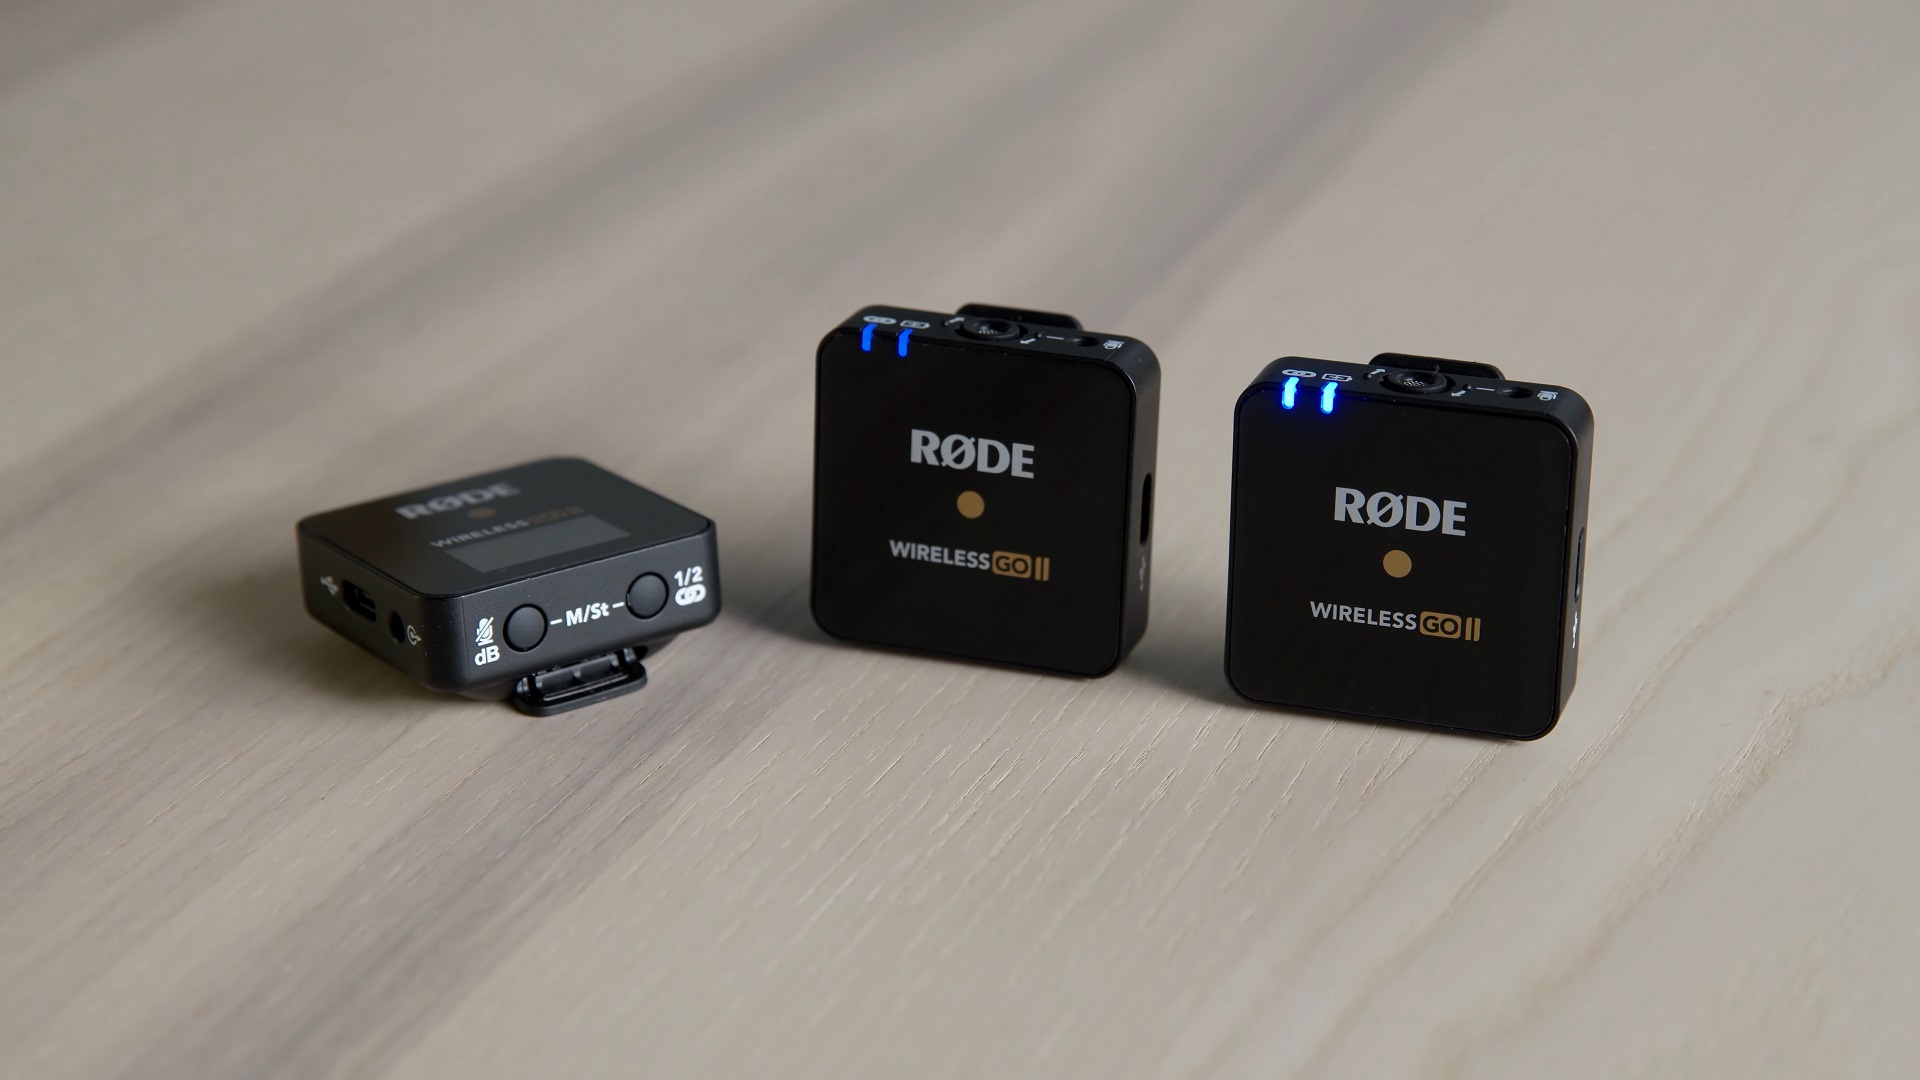 RØDE Wireless GO IIの新アクセサリー「FlexClip GO」と「COLORS 2」が 